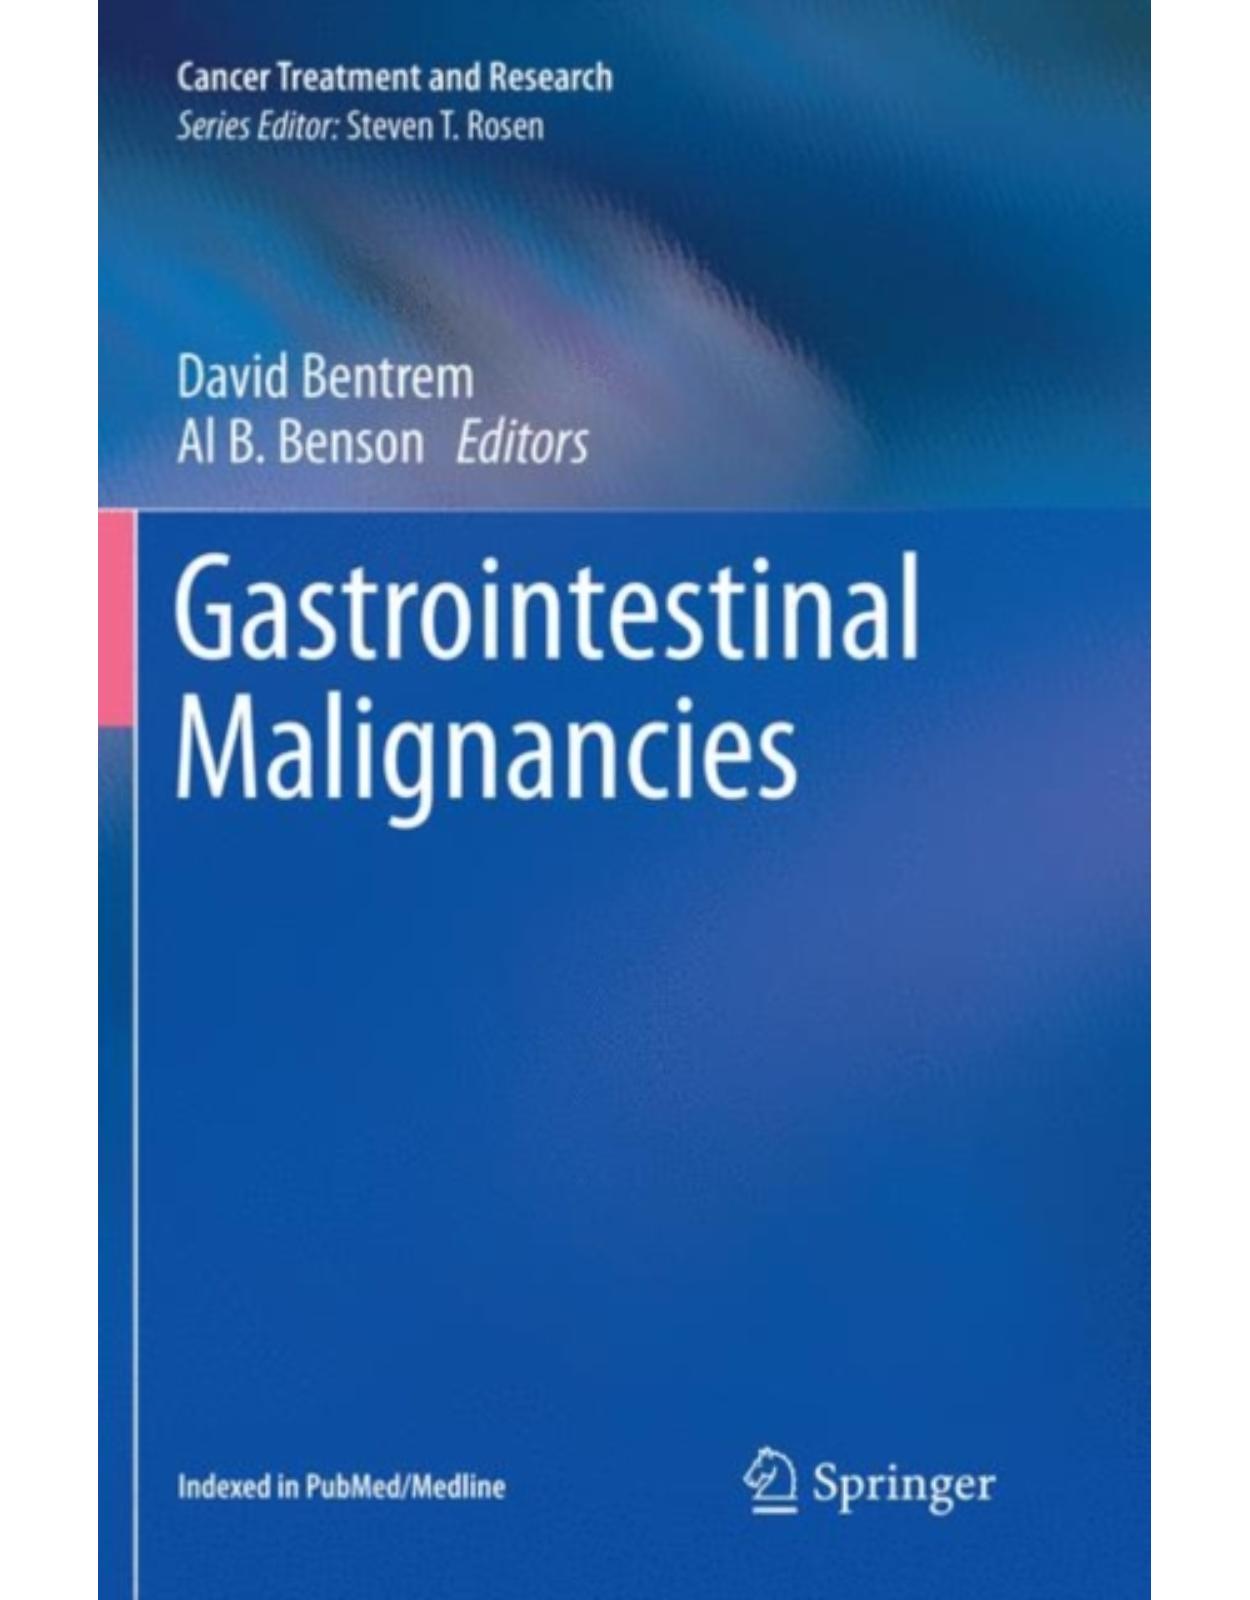 Gastrointestinal Malignancies